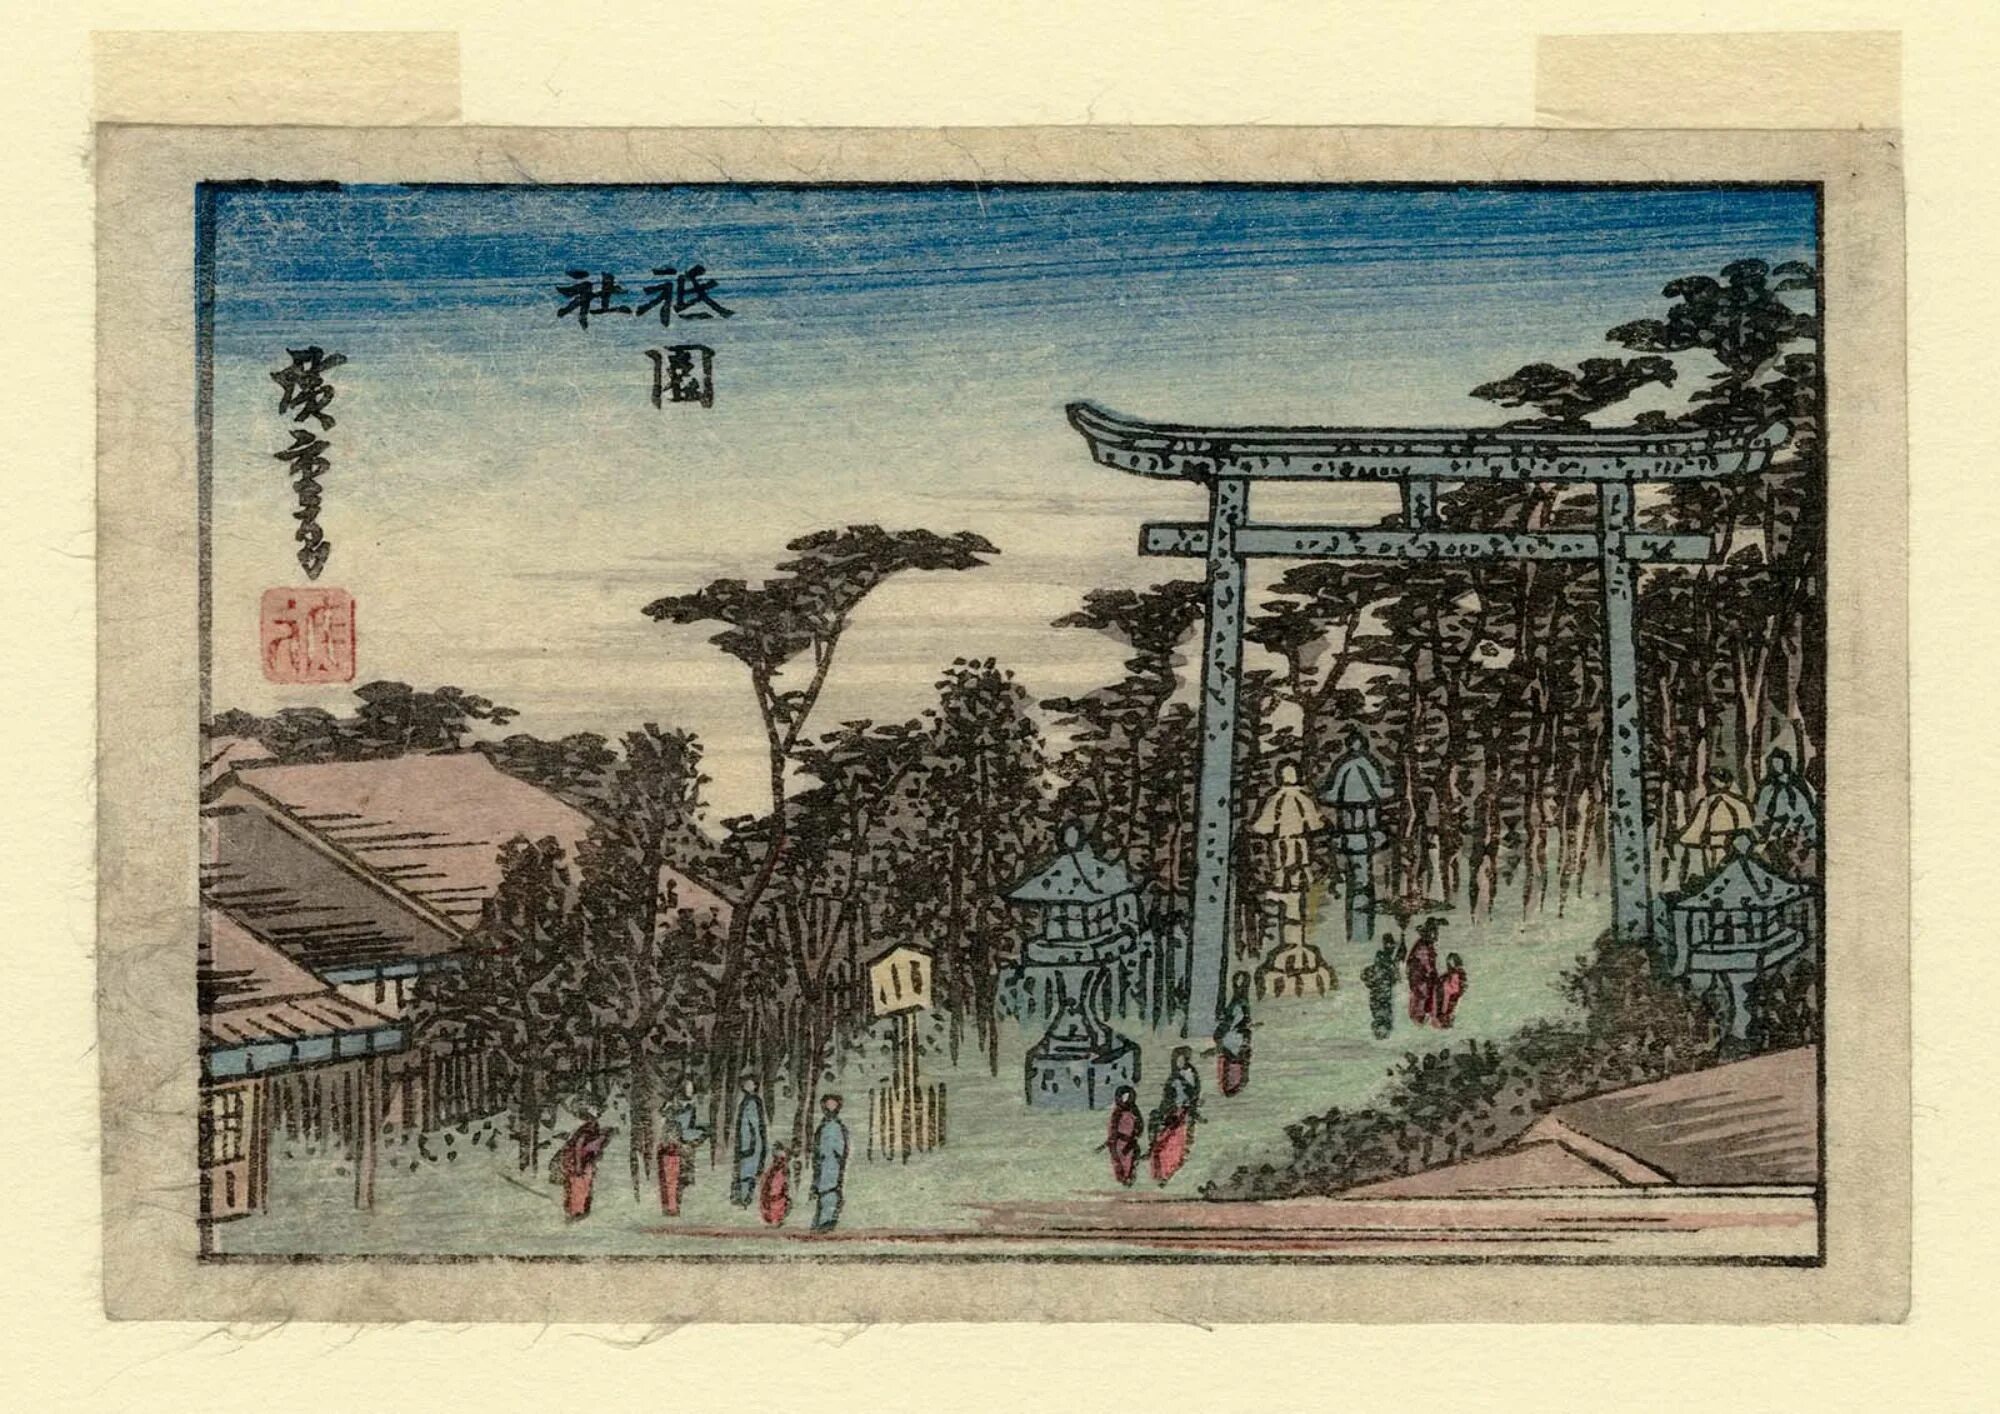 Япония 8 века. Город Эдо в Японии 17 век. Киото Япония 18 век. Город Эдо в Японии 18 век. Япония 19 века Киото.